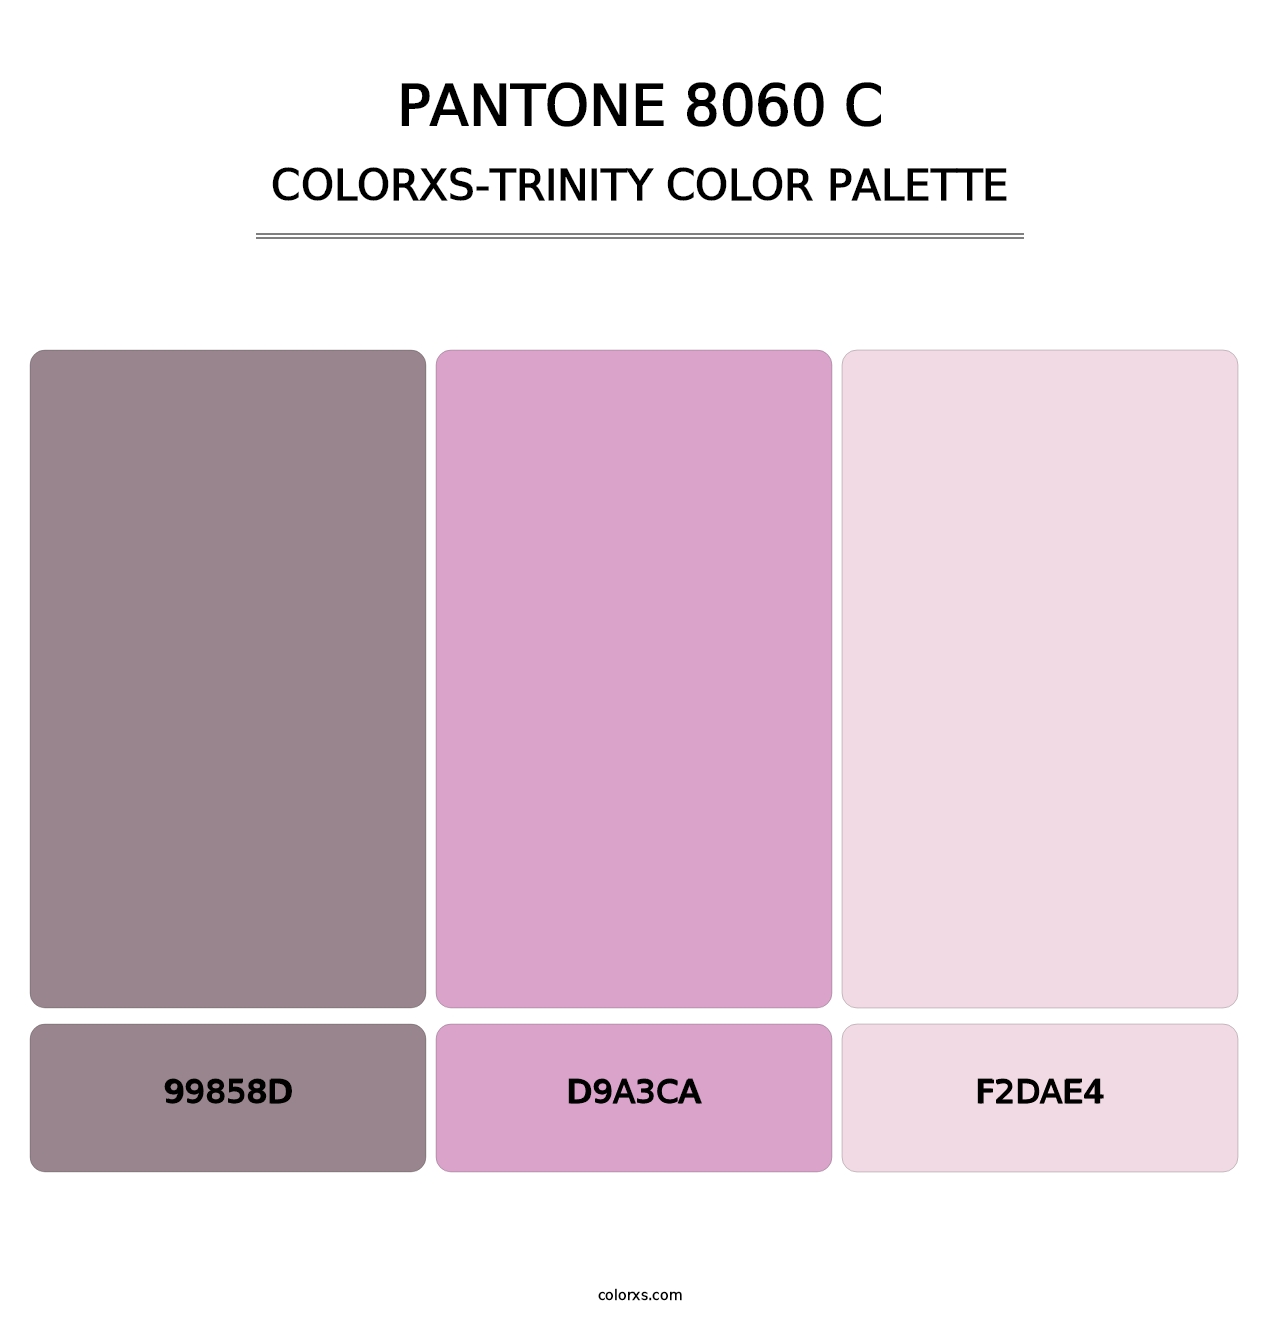 PANTONE 8060 C - Colorxs Trinity Palette